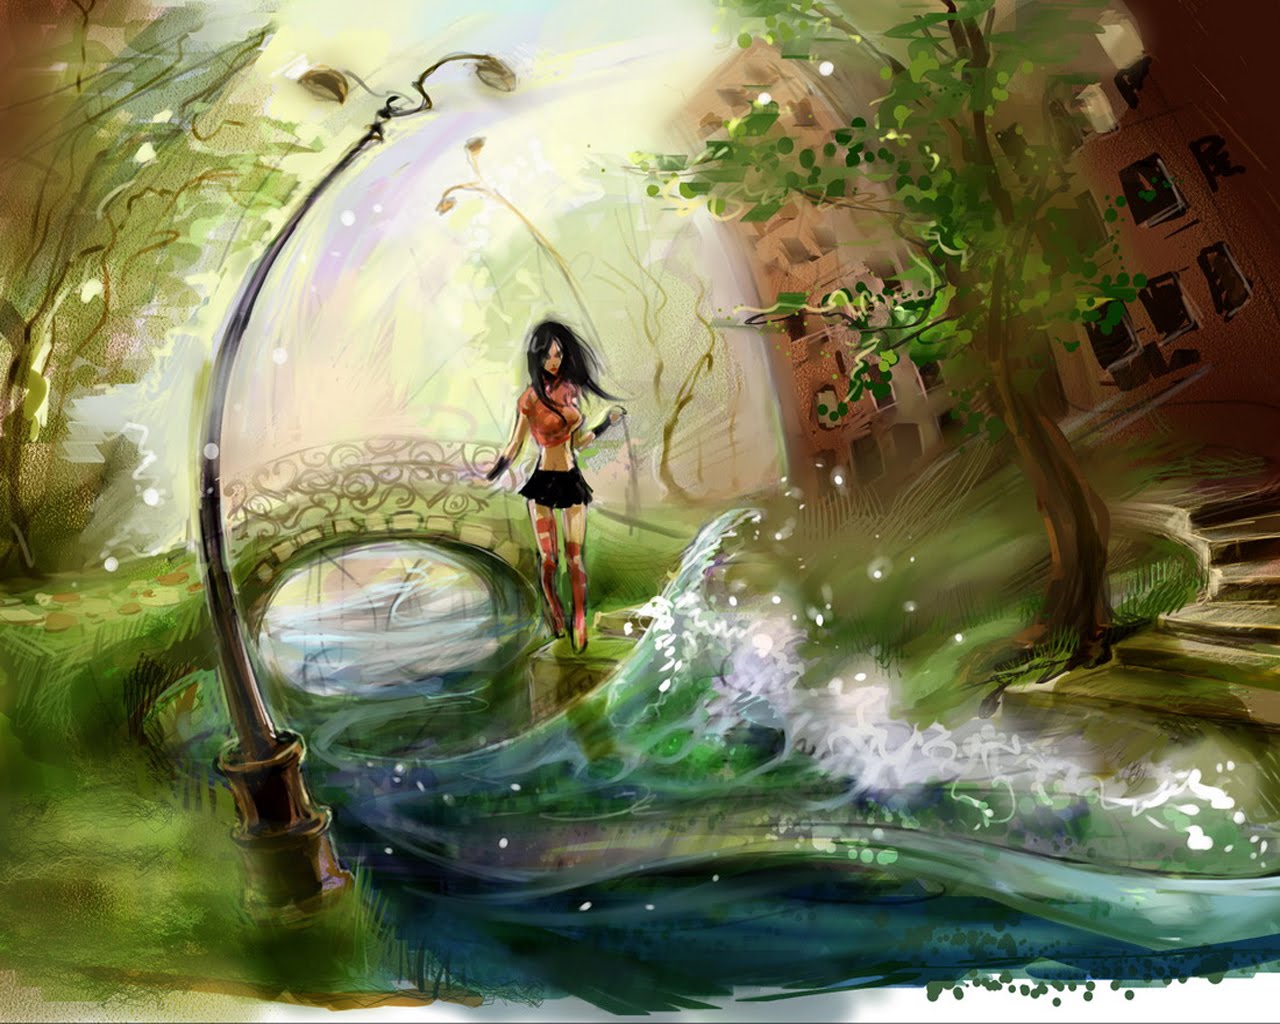 girl painting wallpaper,cg artwork,illustration,painting,art,fictional character